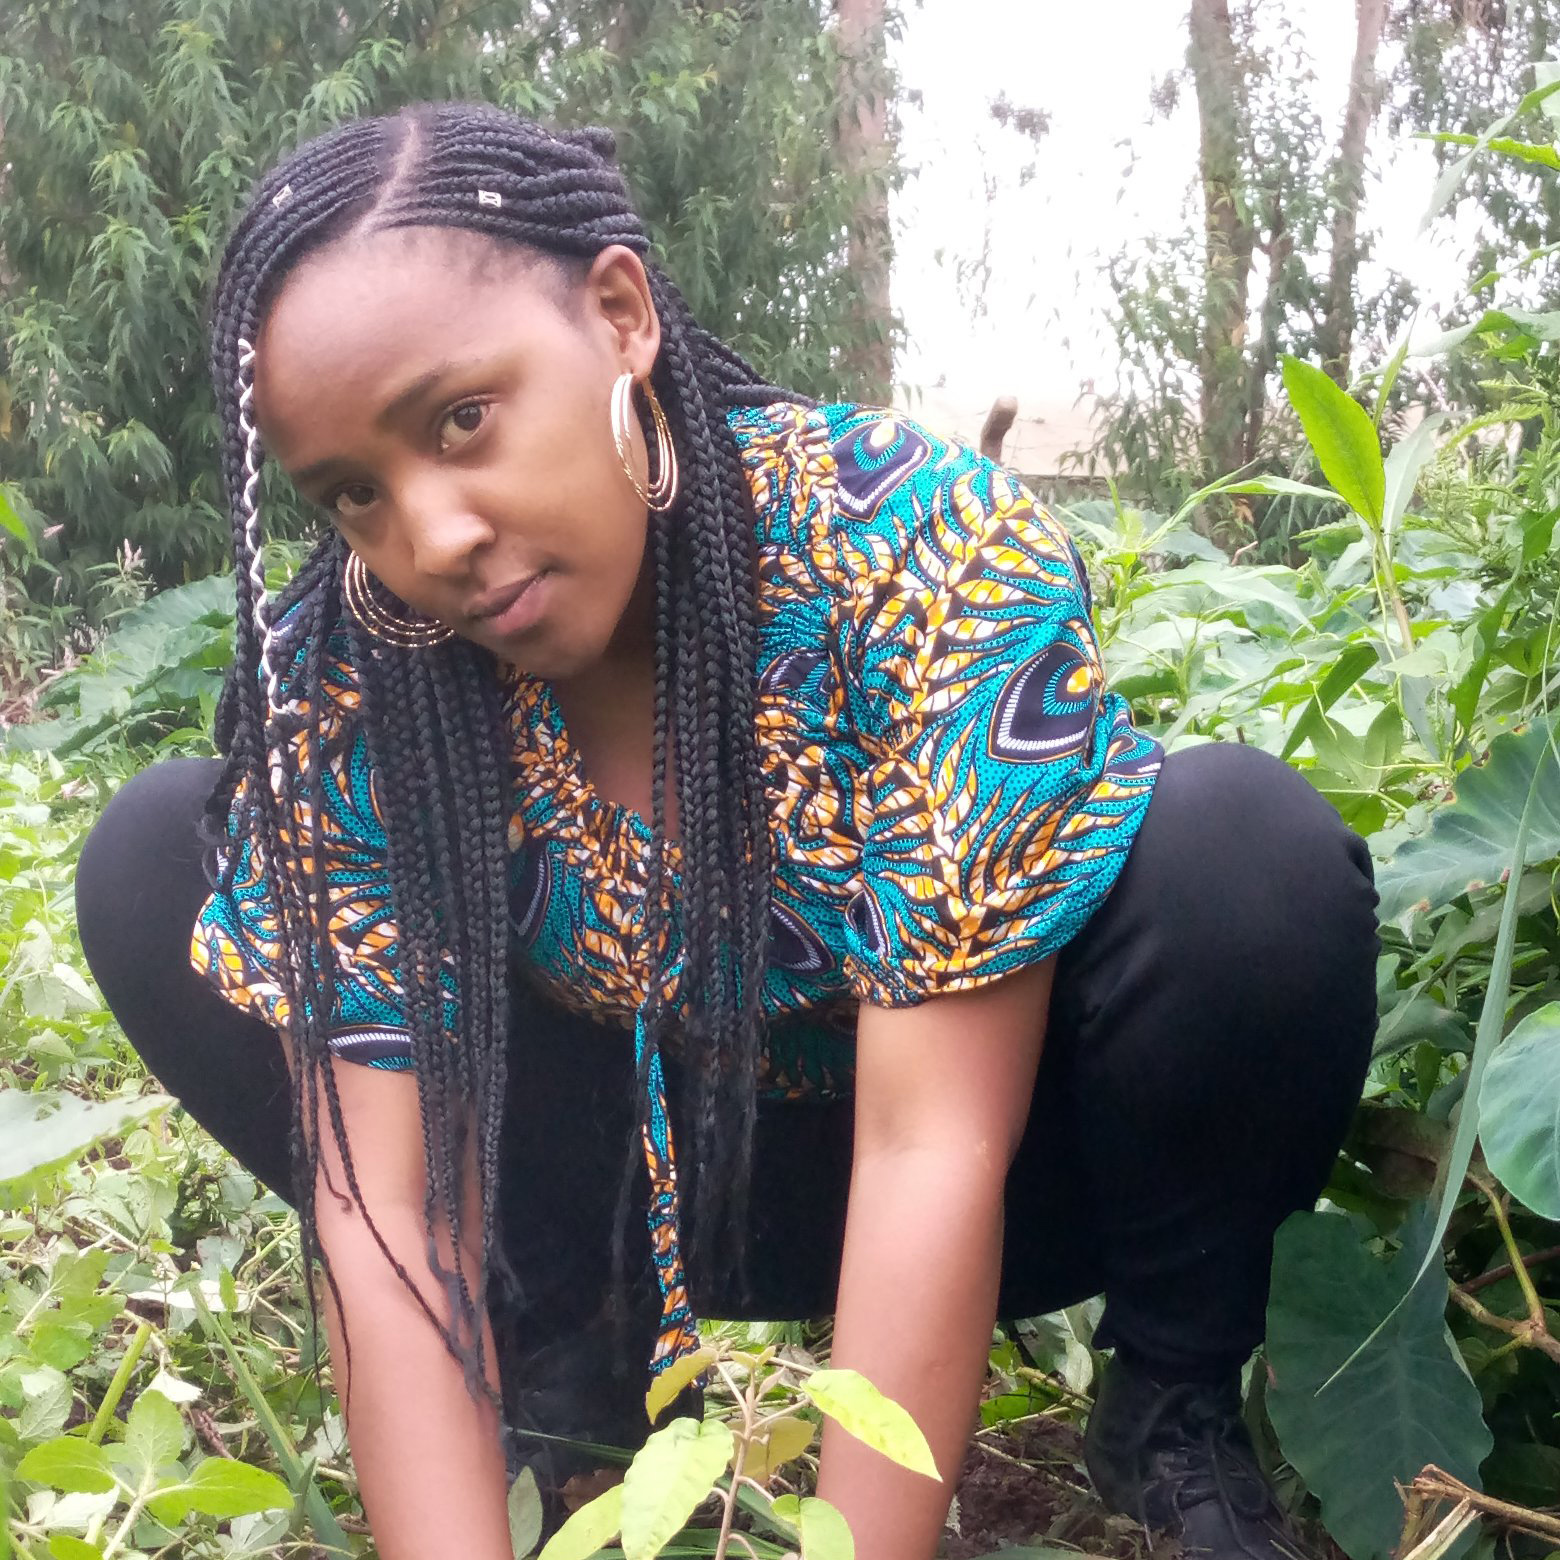 Elizabeth Wanjiru Wathuti